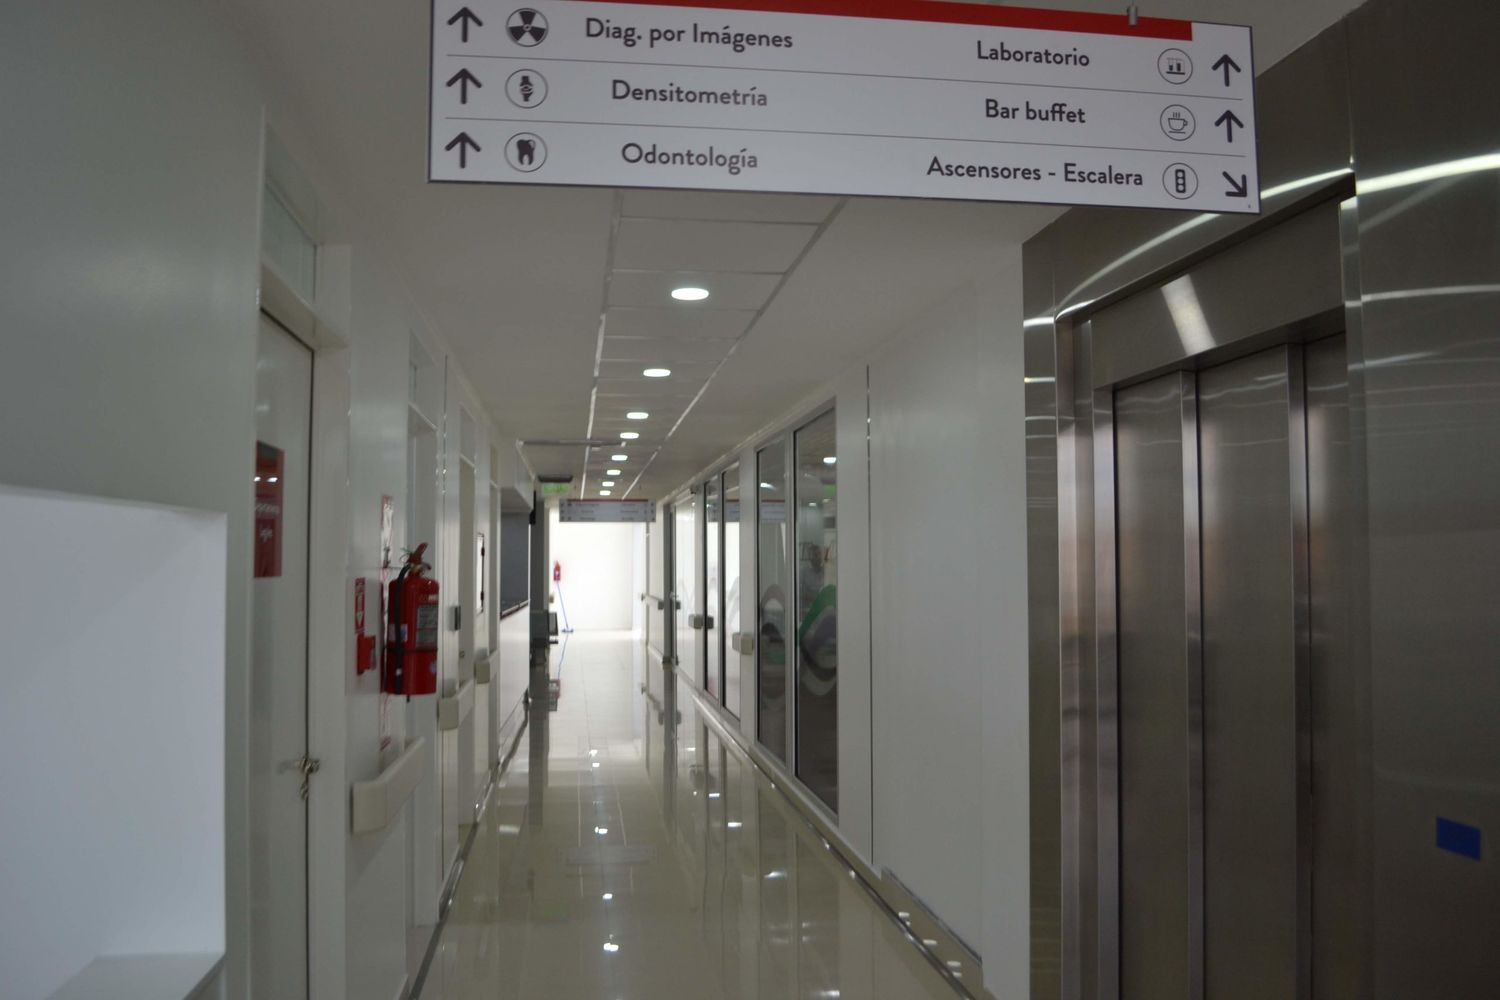 Sadiv cedió gratuitamente su hospital para internar pacientes Covid-19